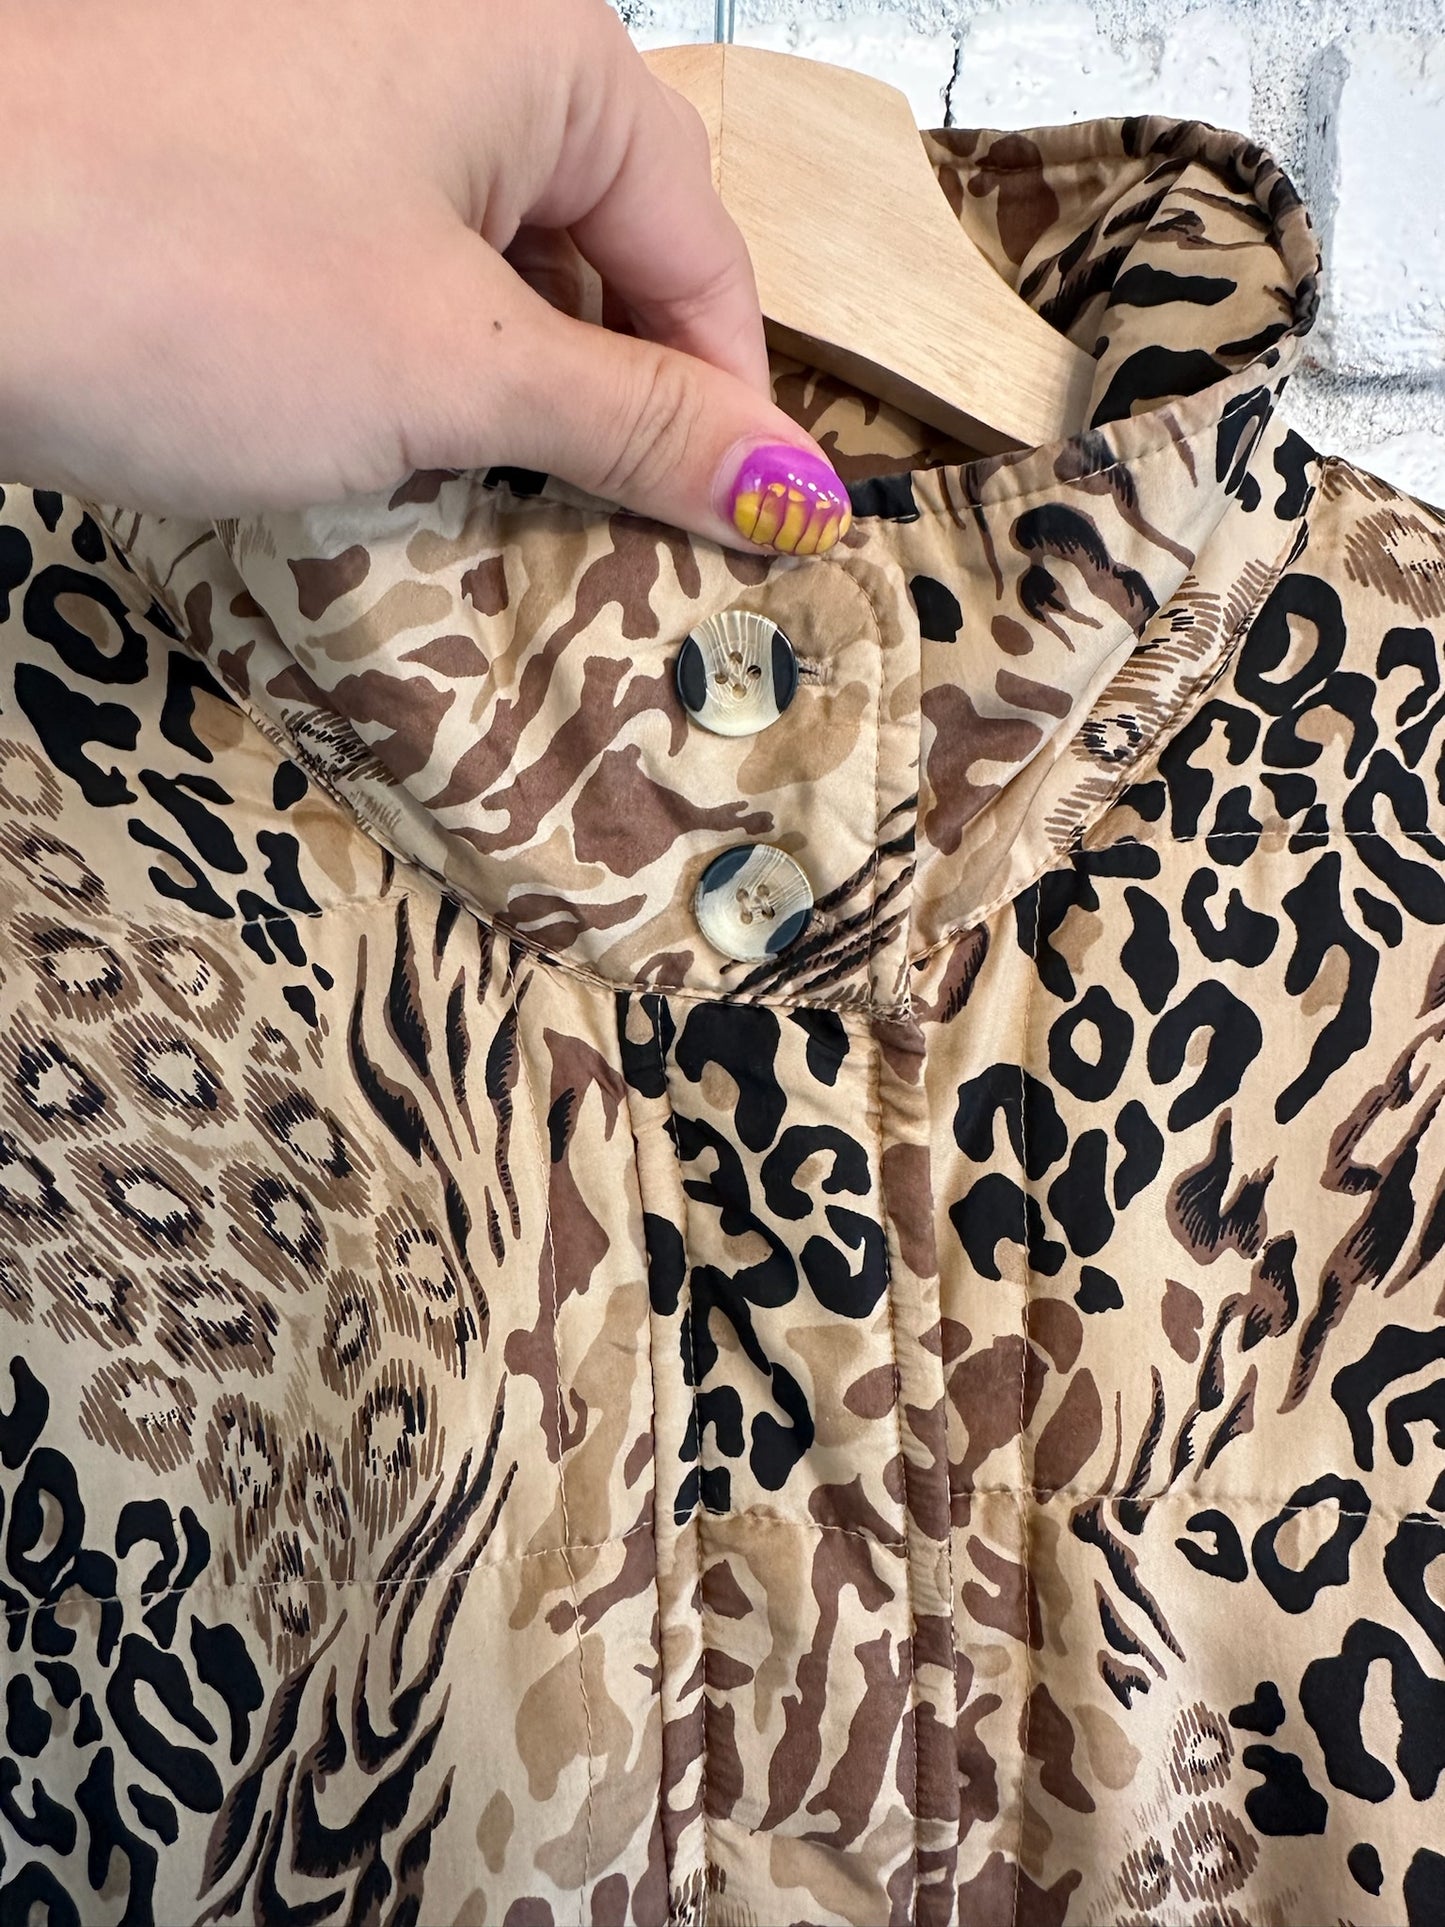 The Lina Leopard Print Jacket